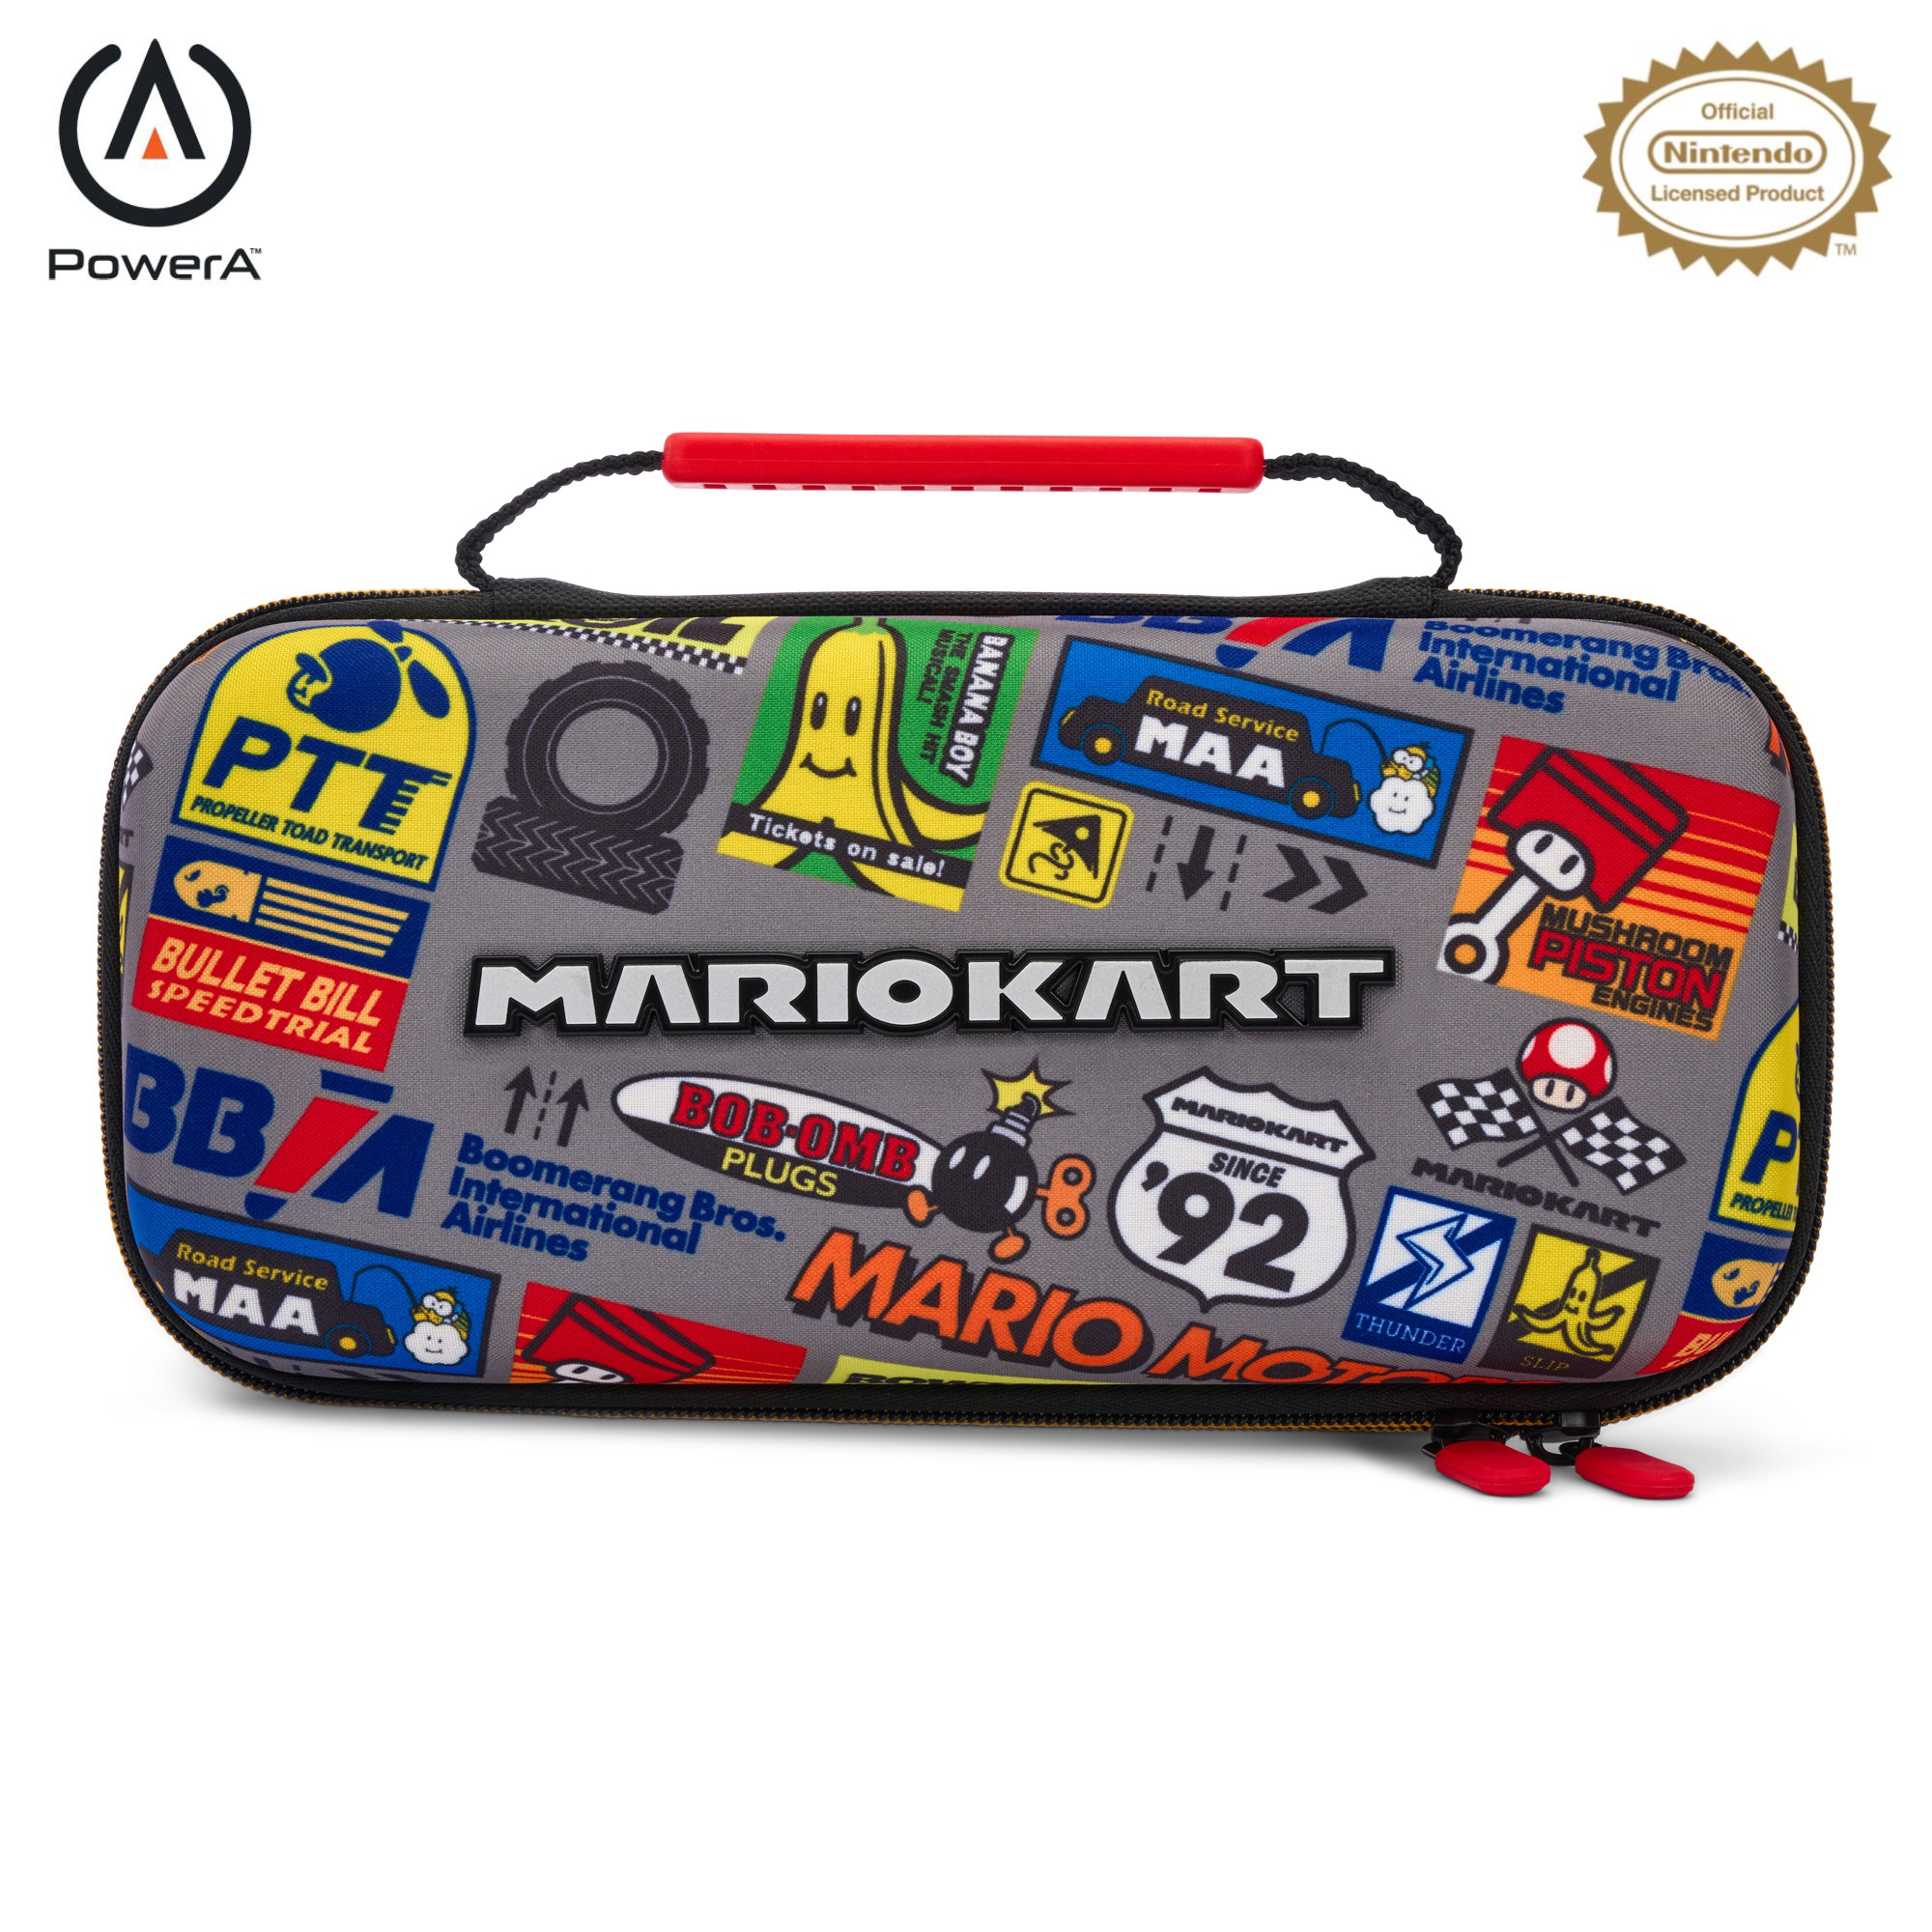 Nintendo Switch Protection Case - Mario Kart